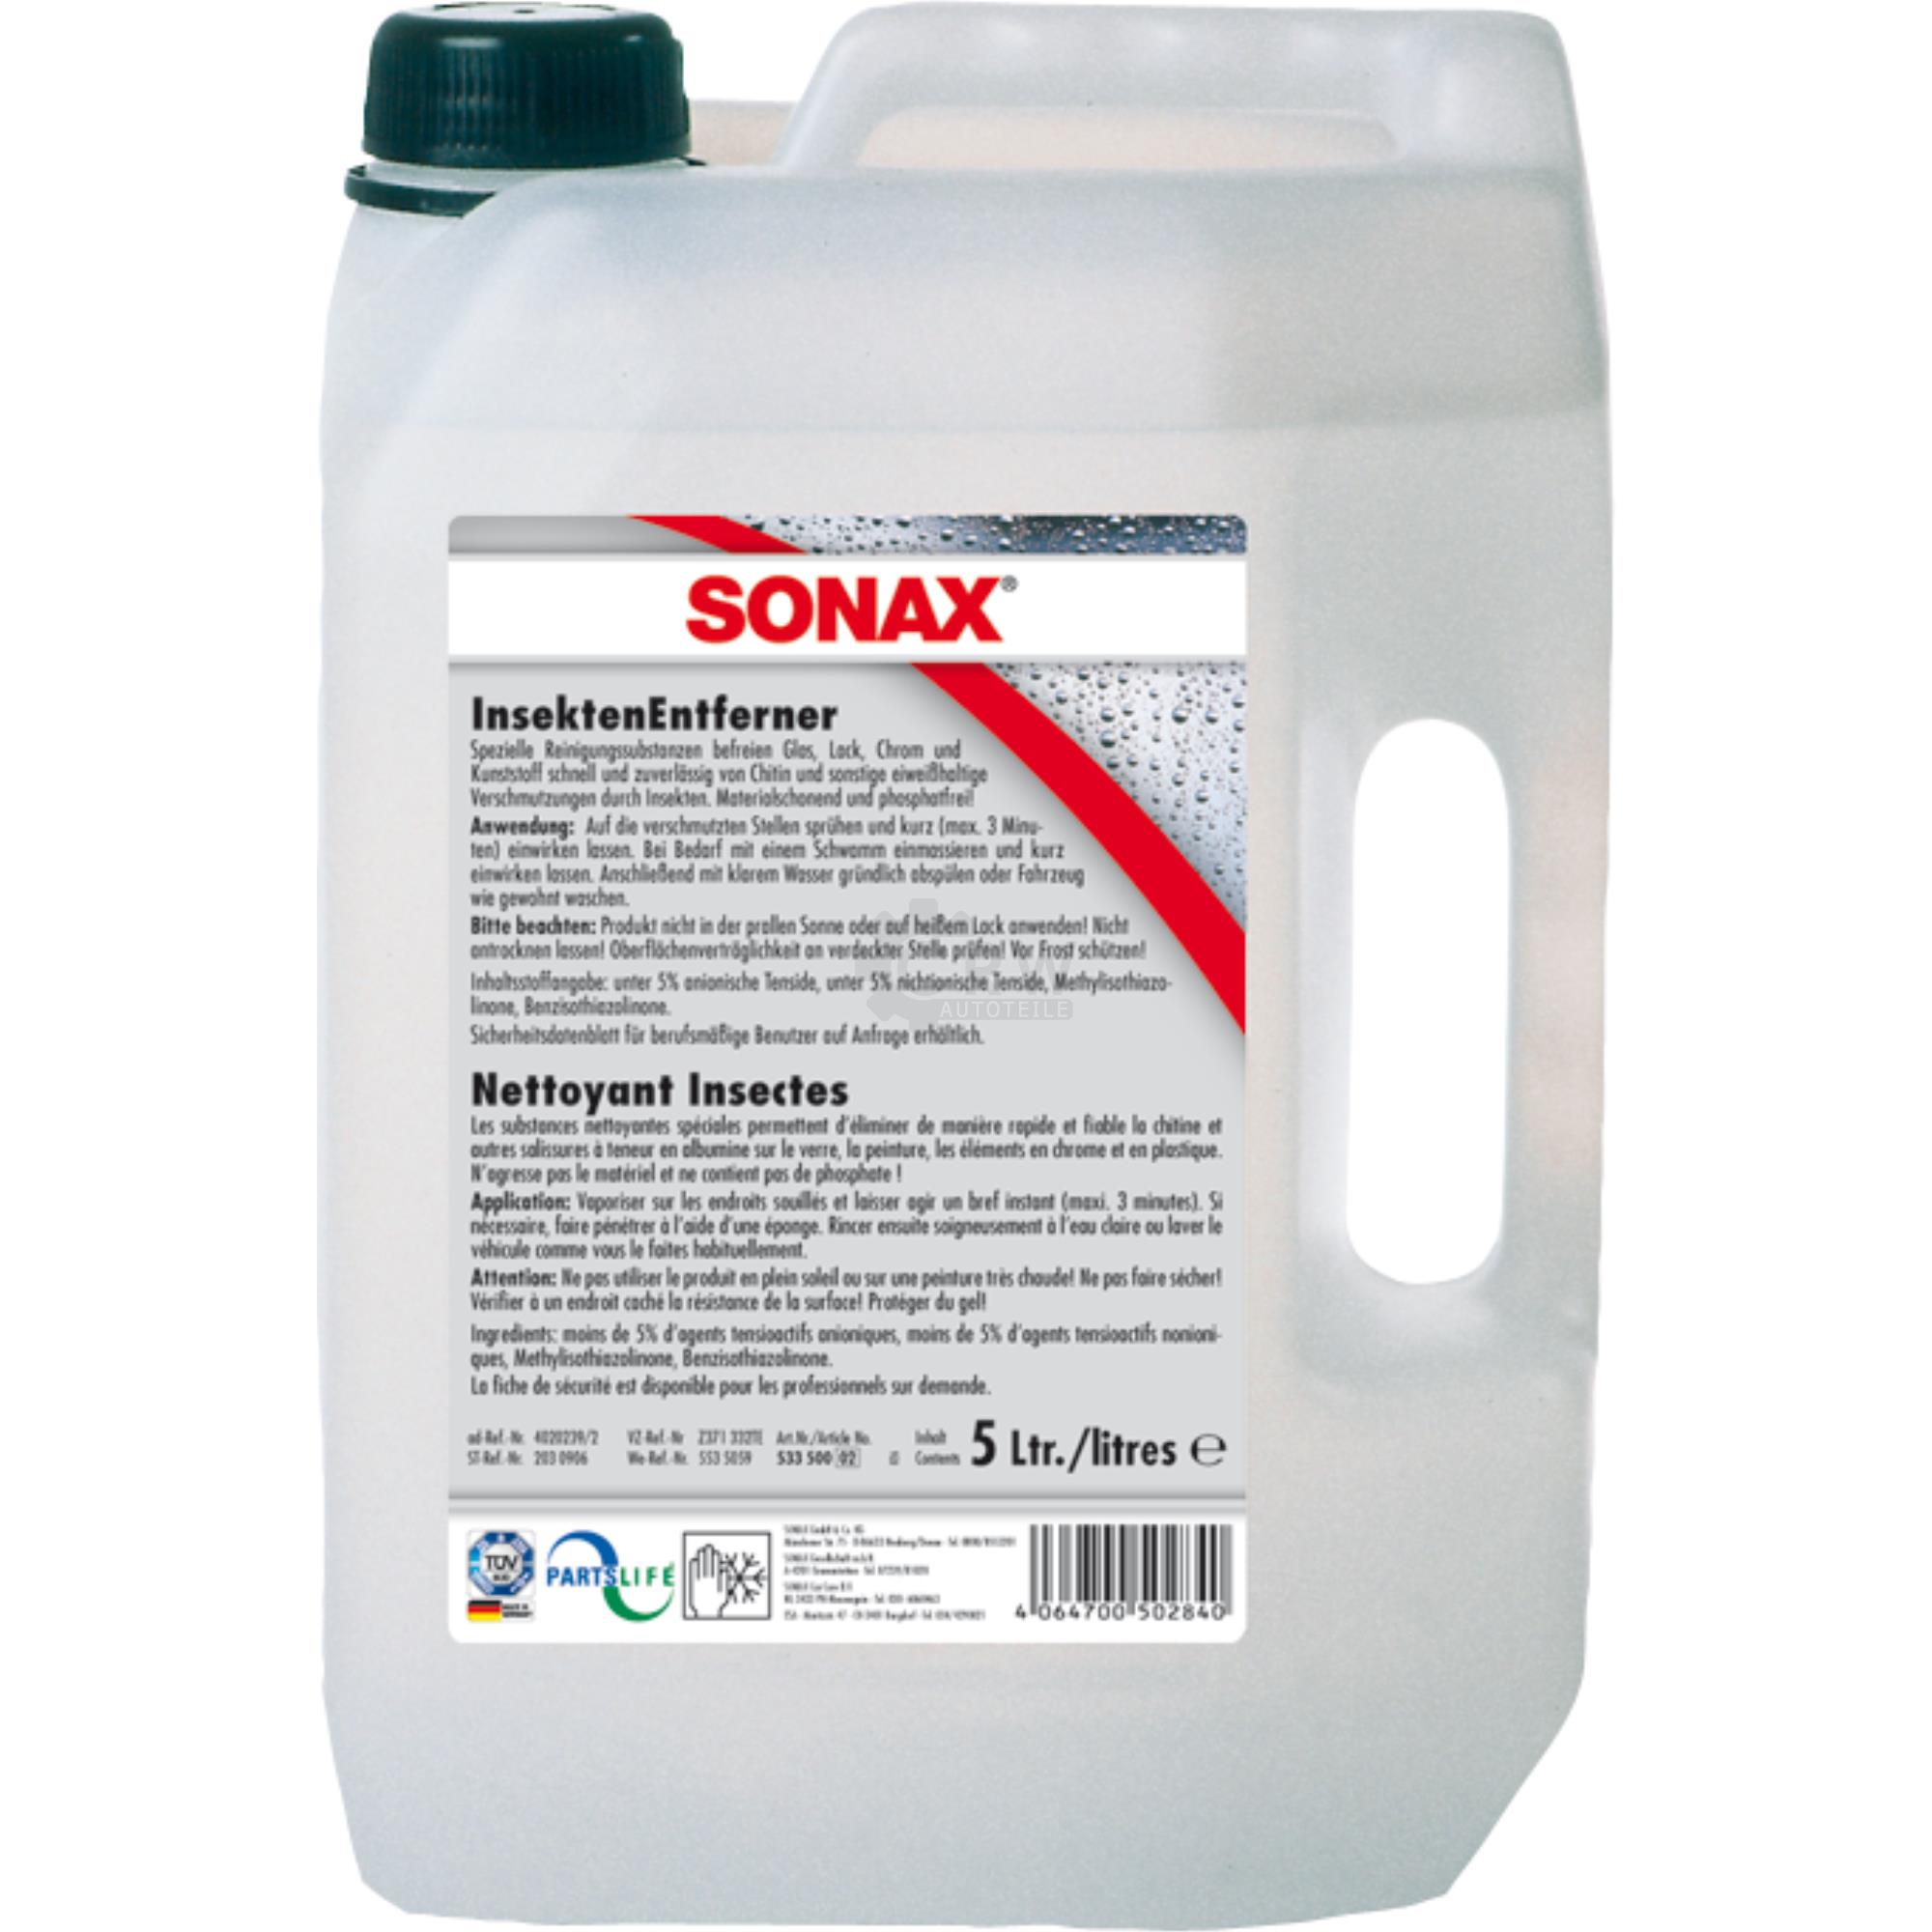 SONAX 05335000 InsektenEntferner Glas Lack Chrom Kunststoff Reiniger 5L